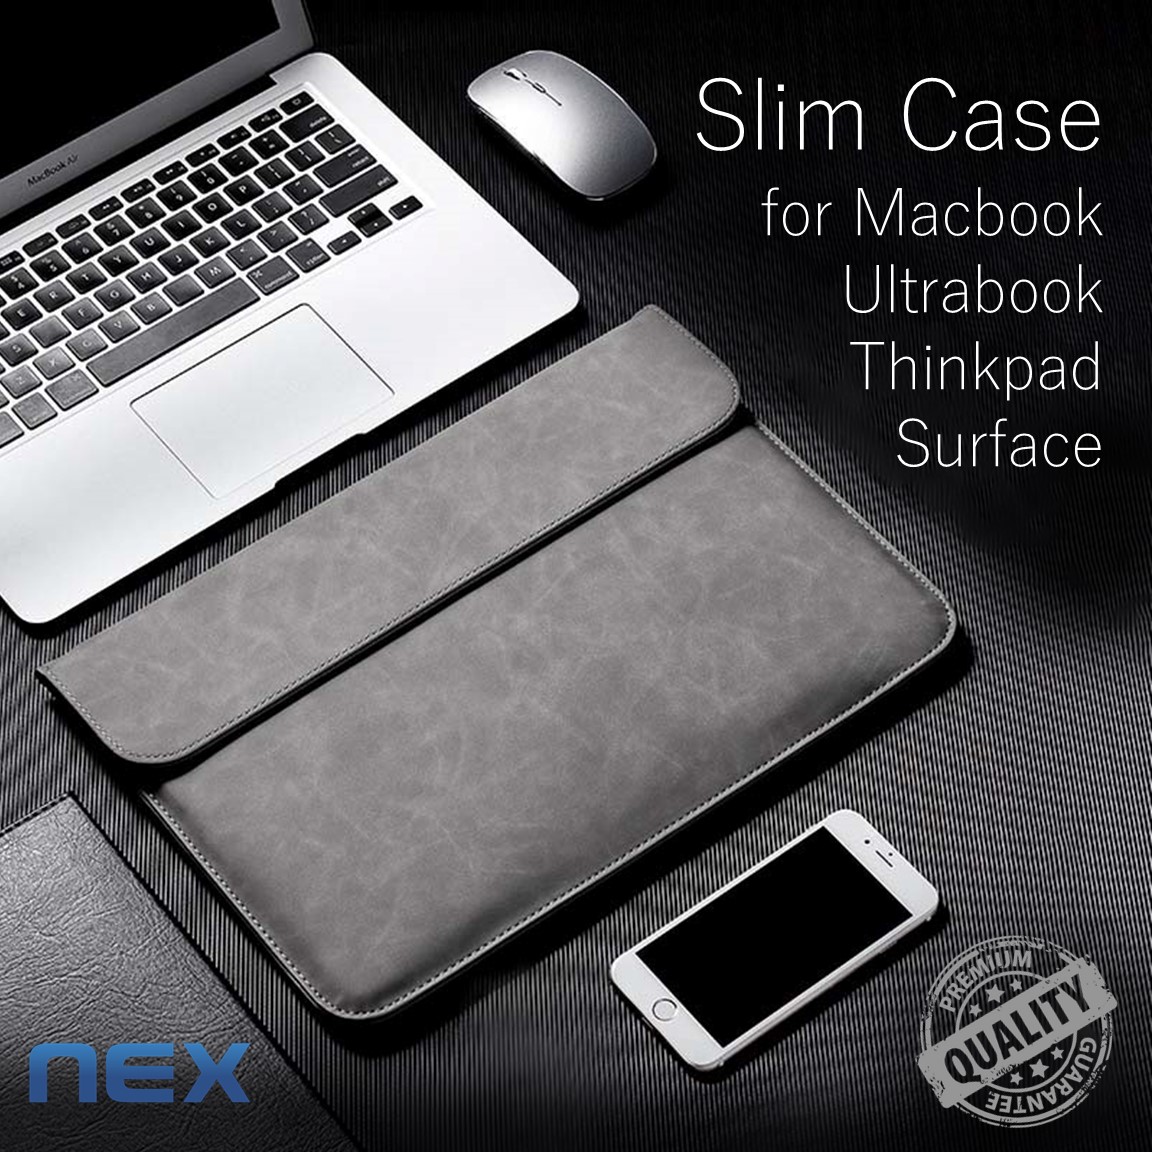 NEX เคสแล็ปท็อป เคสMacbook Ultrabook เคสโน็ตบุ๊ค 13.3 ,15.4 นิ้ว ดีไซน์เรียบหรู บางเบา กันรอยกันกระแทก Ultra Slim Case for Laptop Macbook Air Pro Thinkpad Surface Laptop 13.3 ,15.4 inch